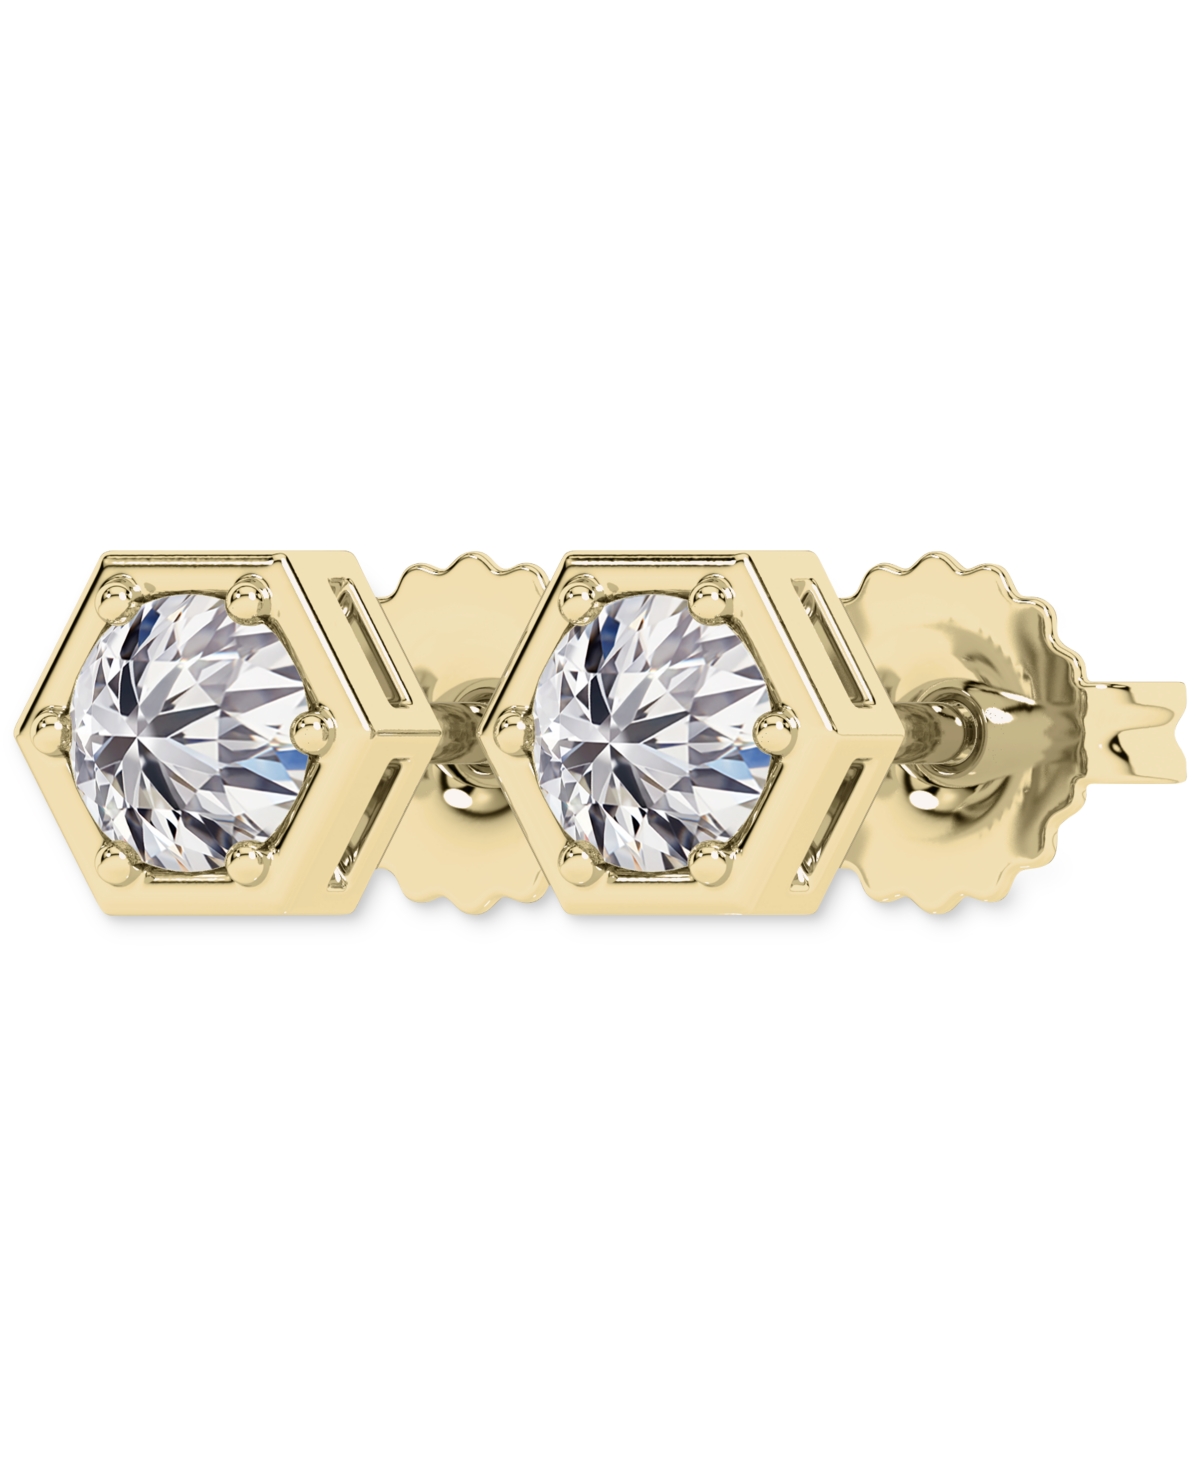 Portfolio by De Beers Forevermark Diamond Honeycomb Stud Earrings (1/2 ct. t.w.) - White Gold